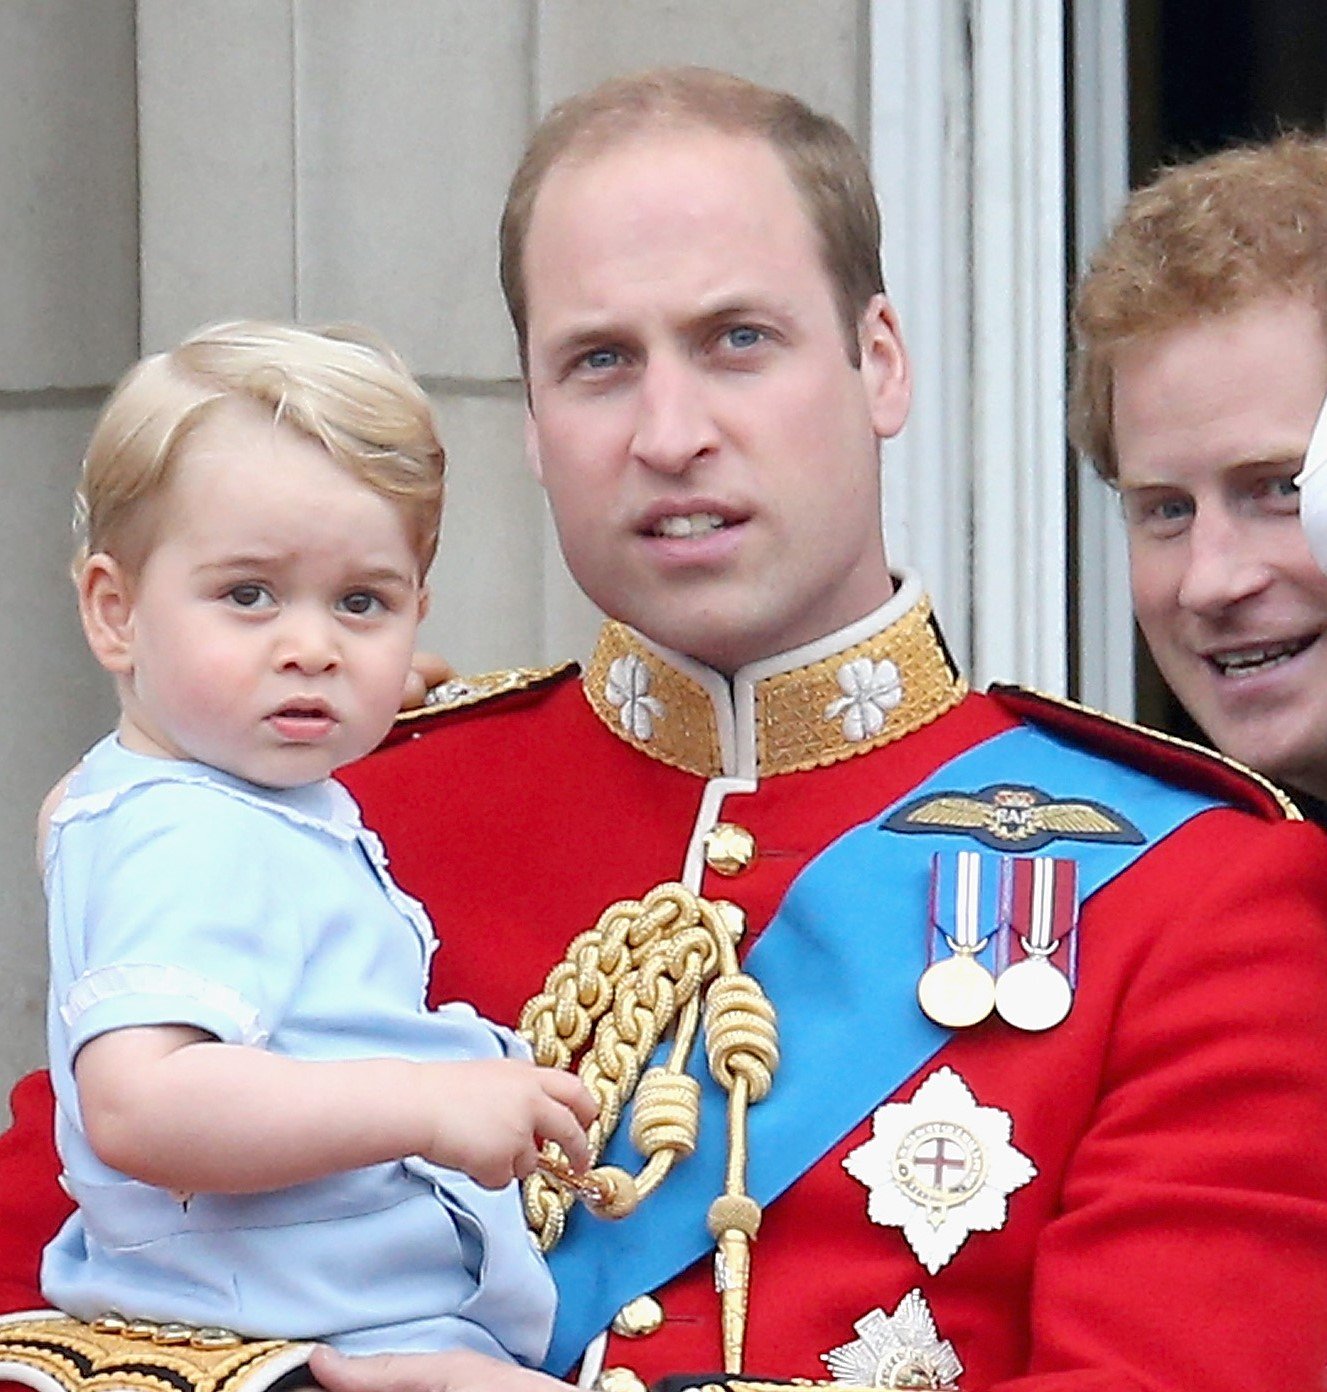 Prince George, Prince William, and Prince Harry